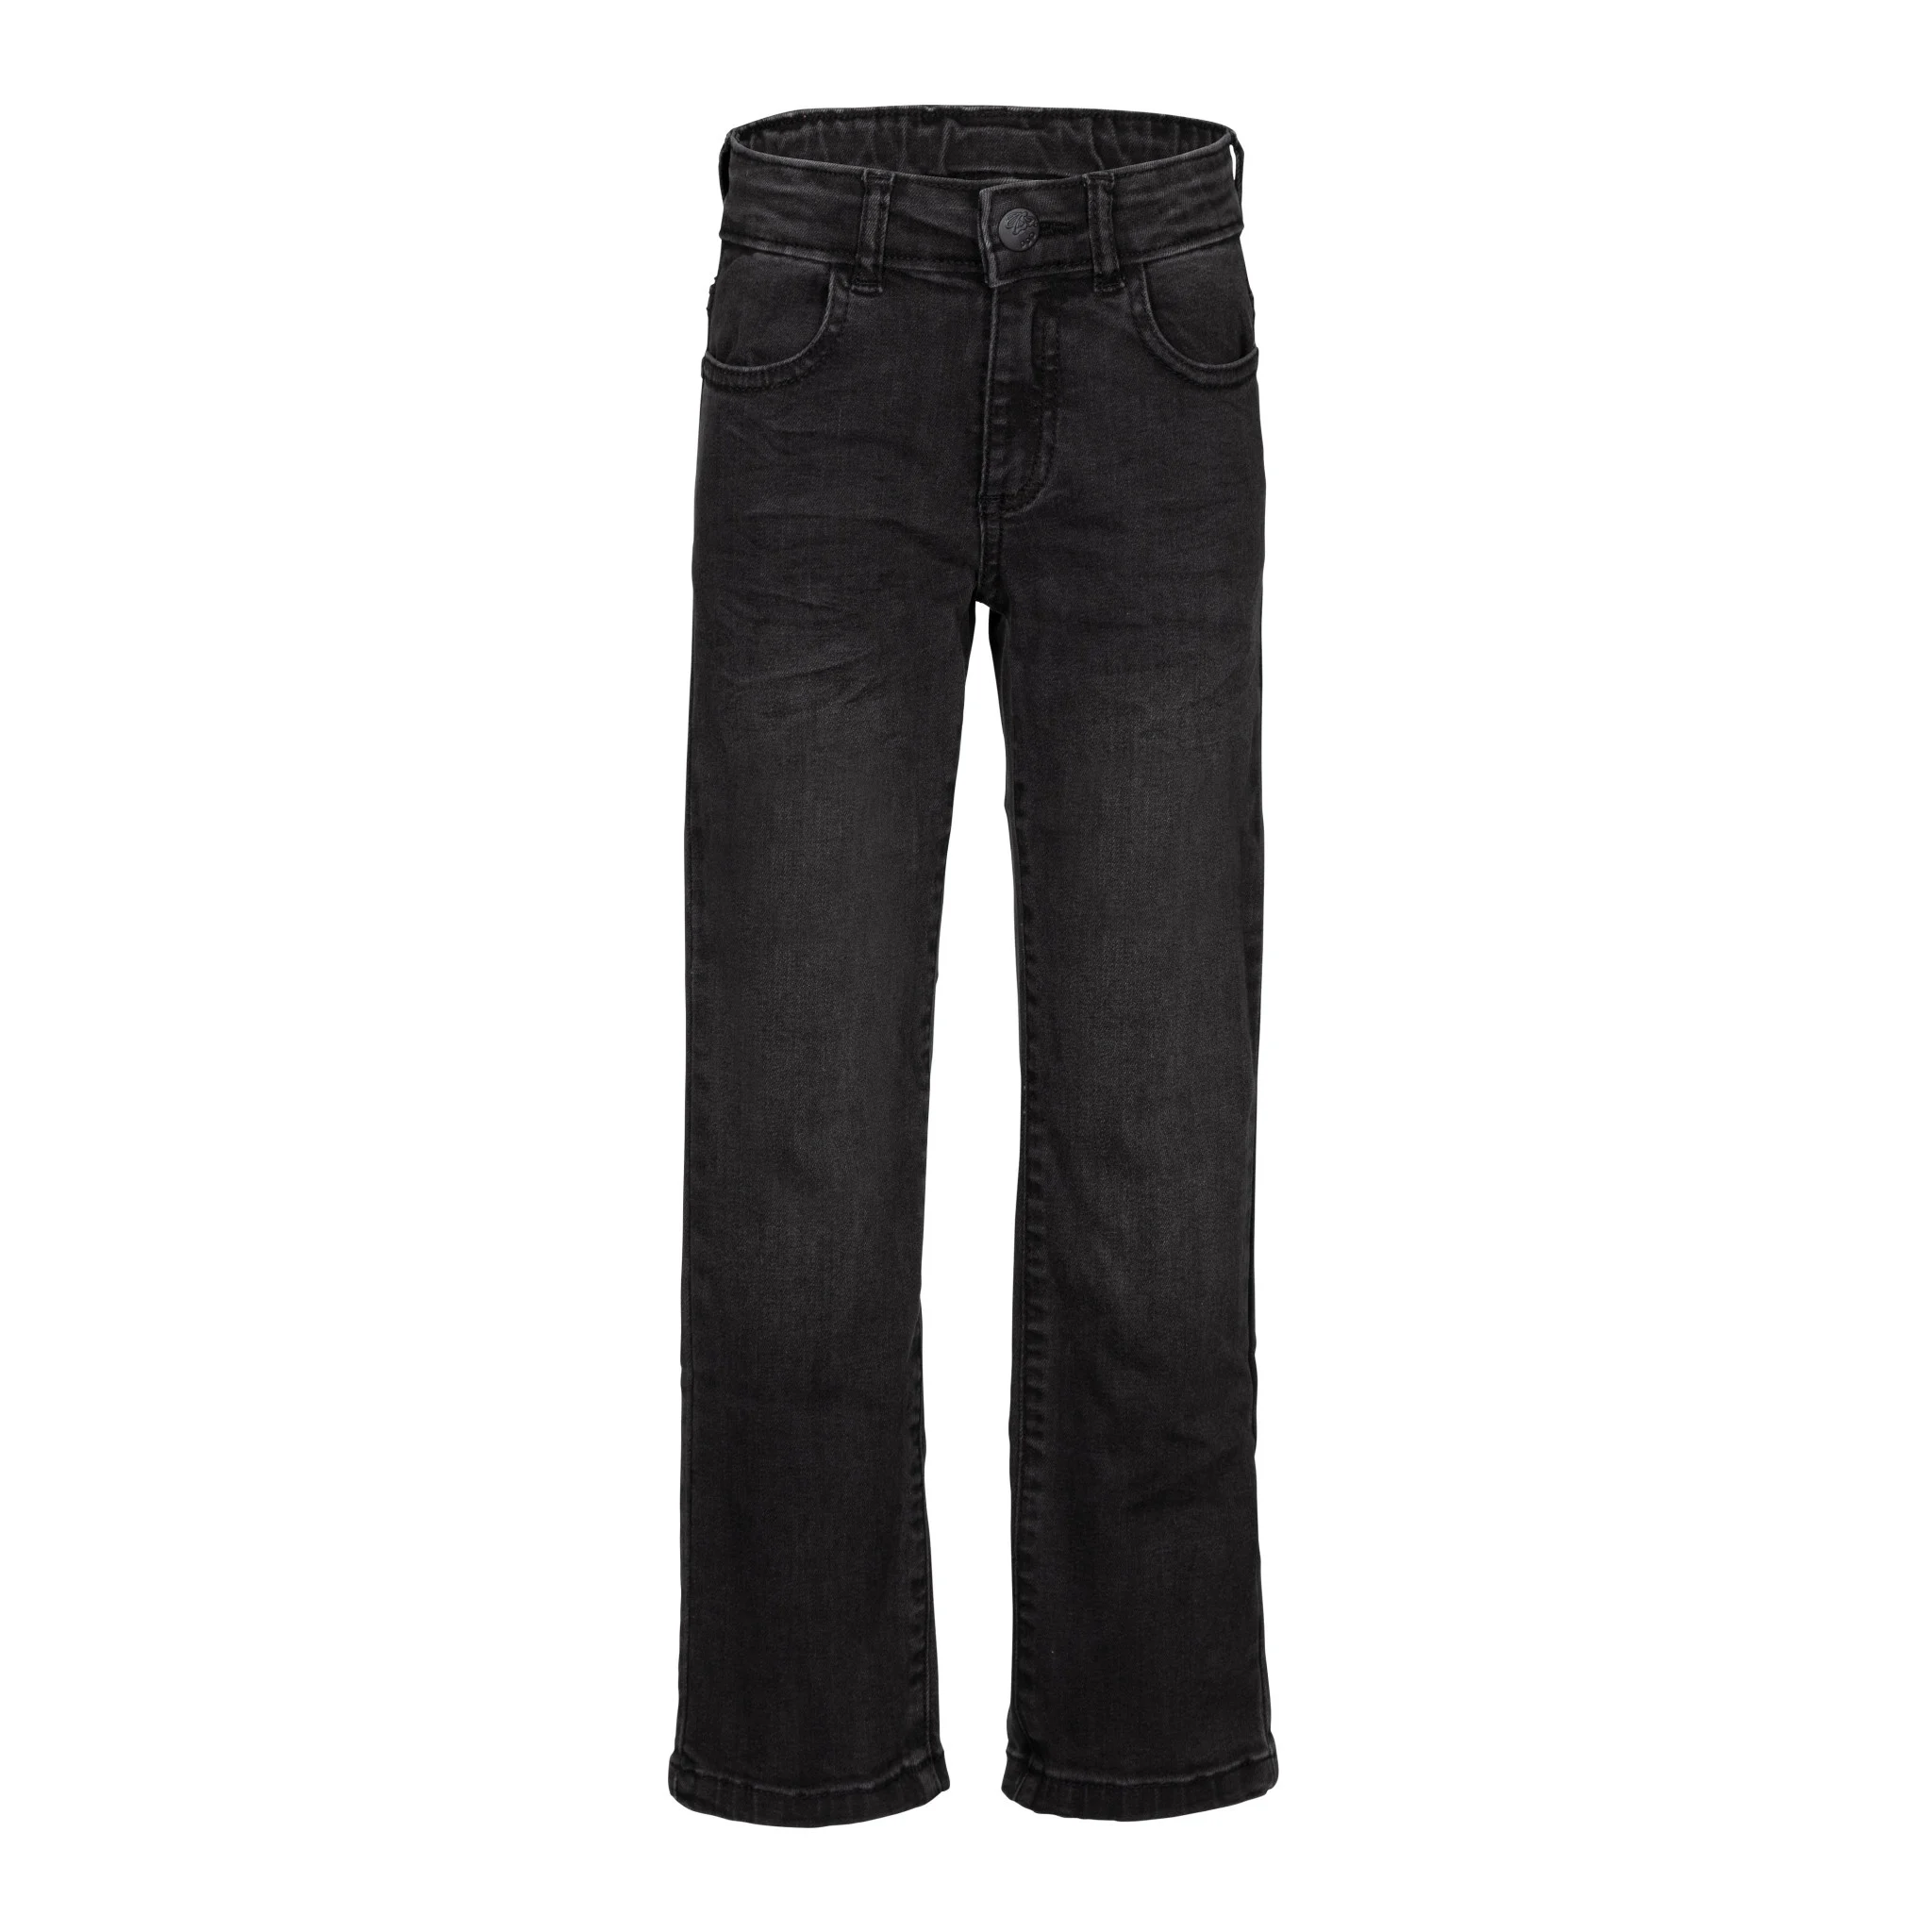 Afbeelding van Dutch Dream Denim Meiden jeans hili wid leg fit grey